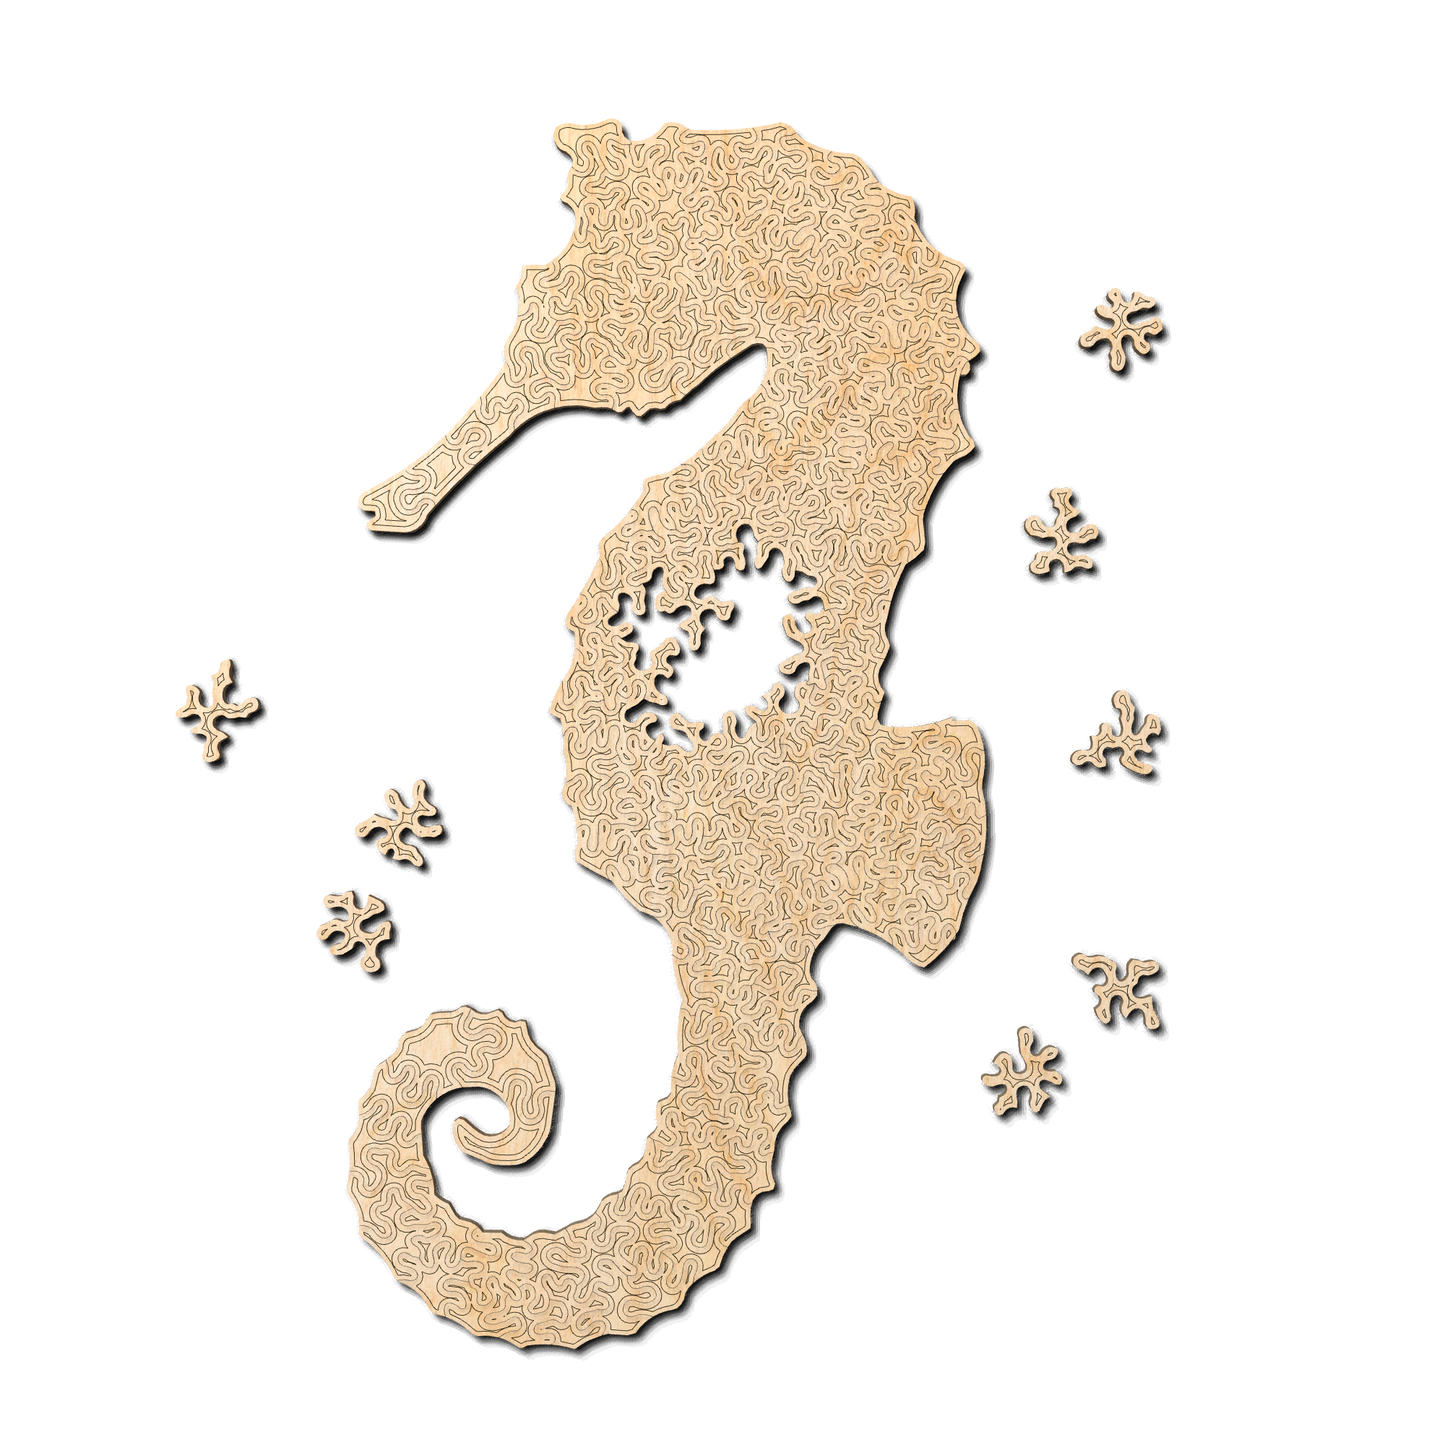 Seahorse | Wooden Puzzle | Chaos series - 150 pieces